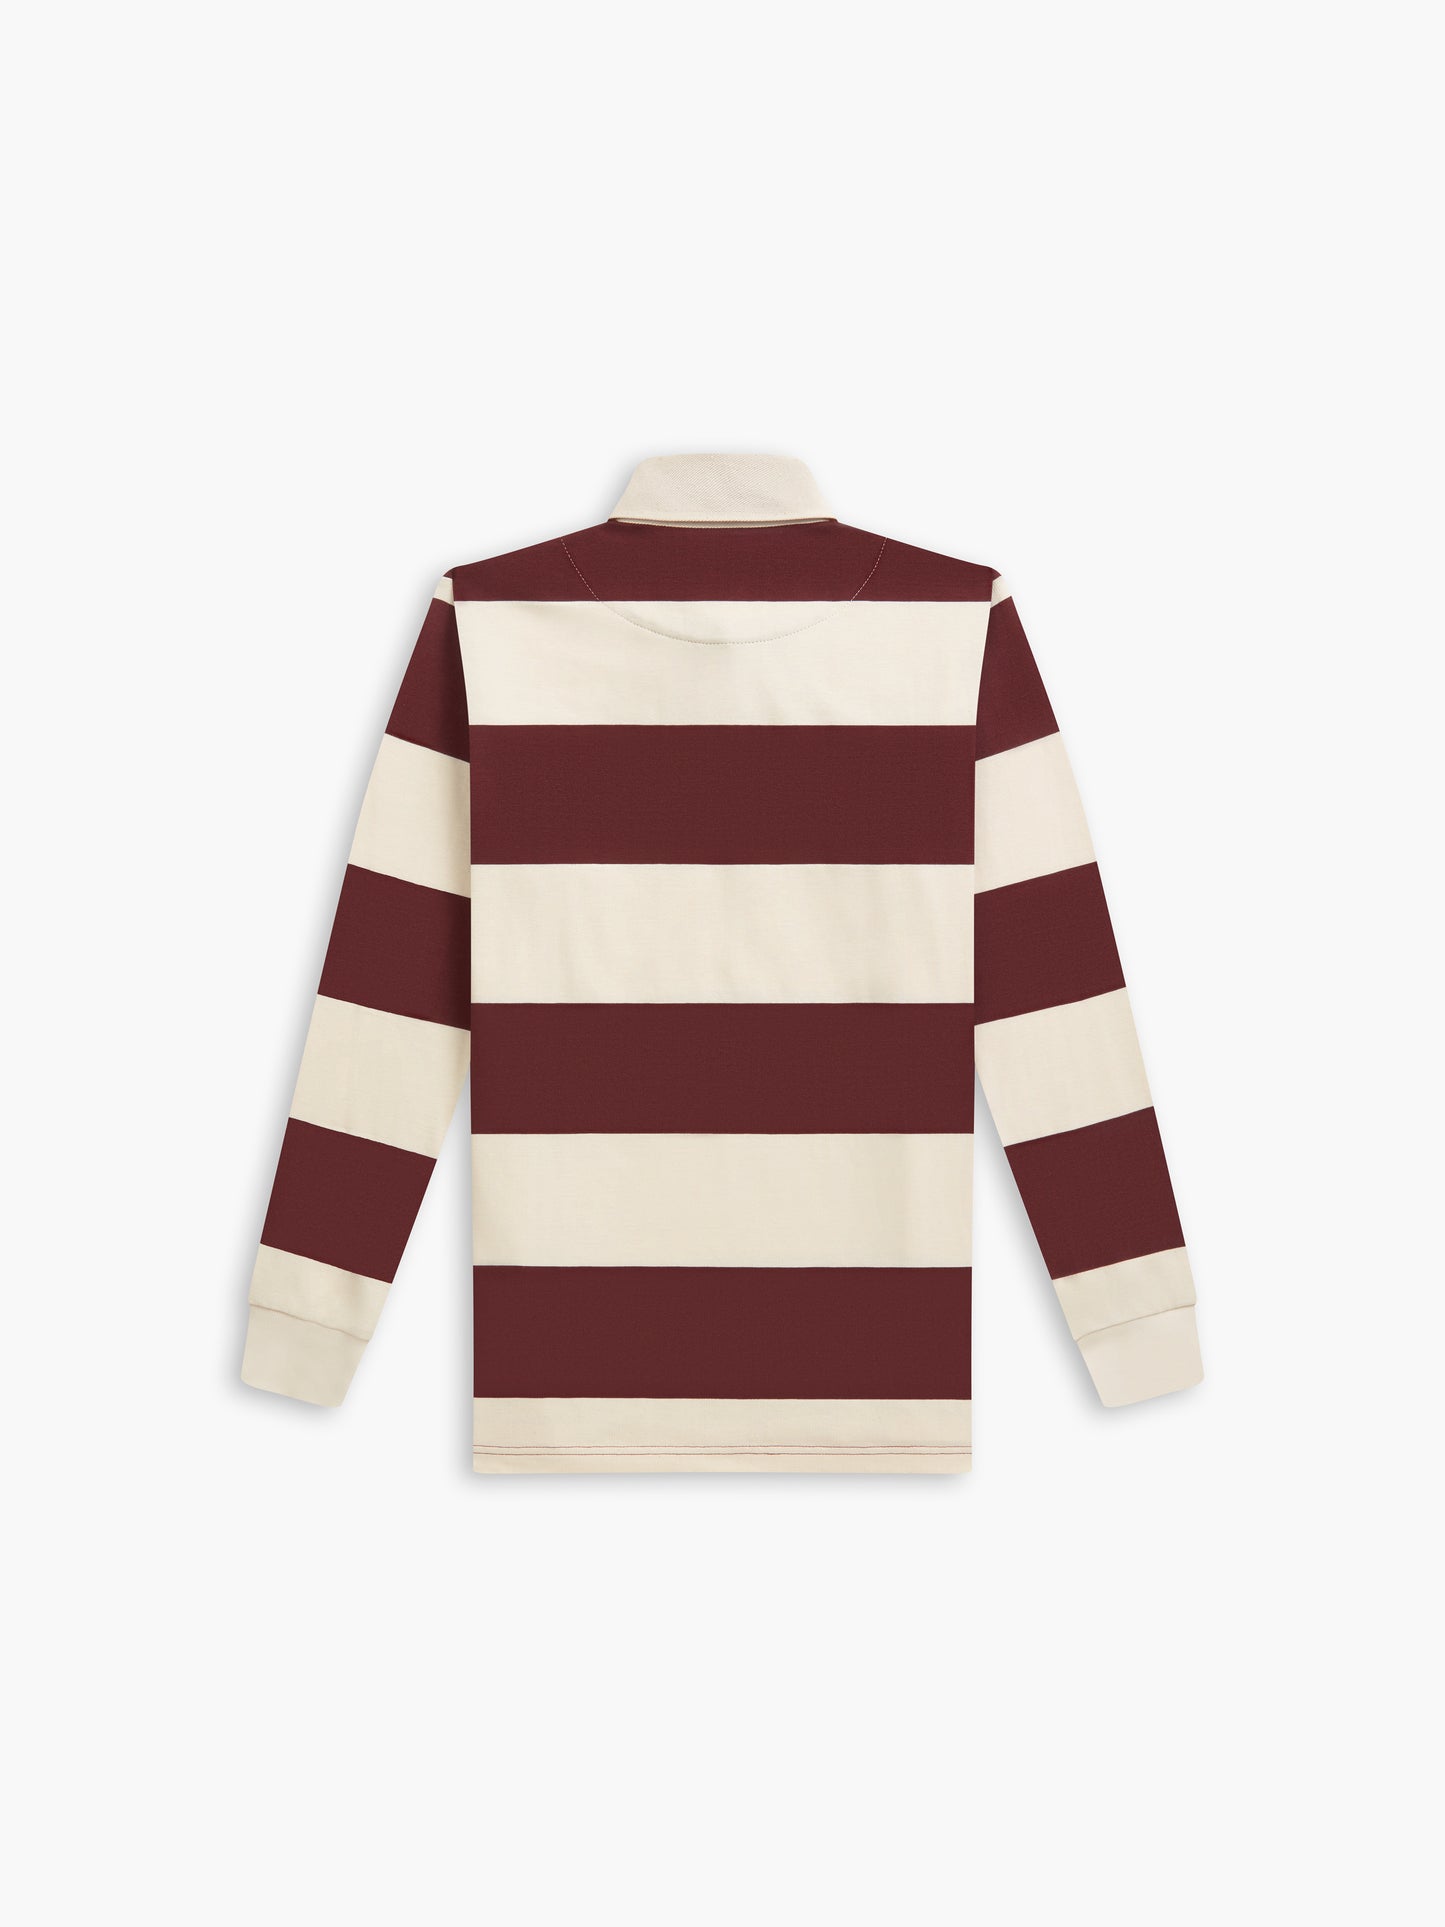 Cotton Rugby Shirt in Burgundy Stripe